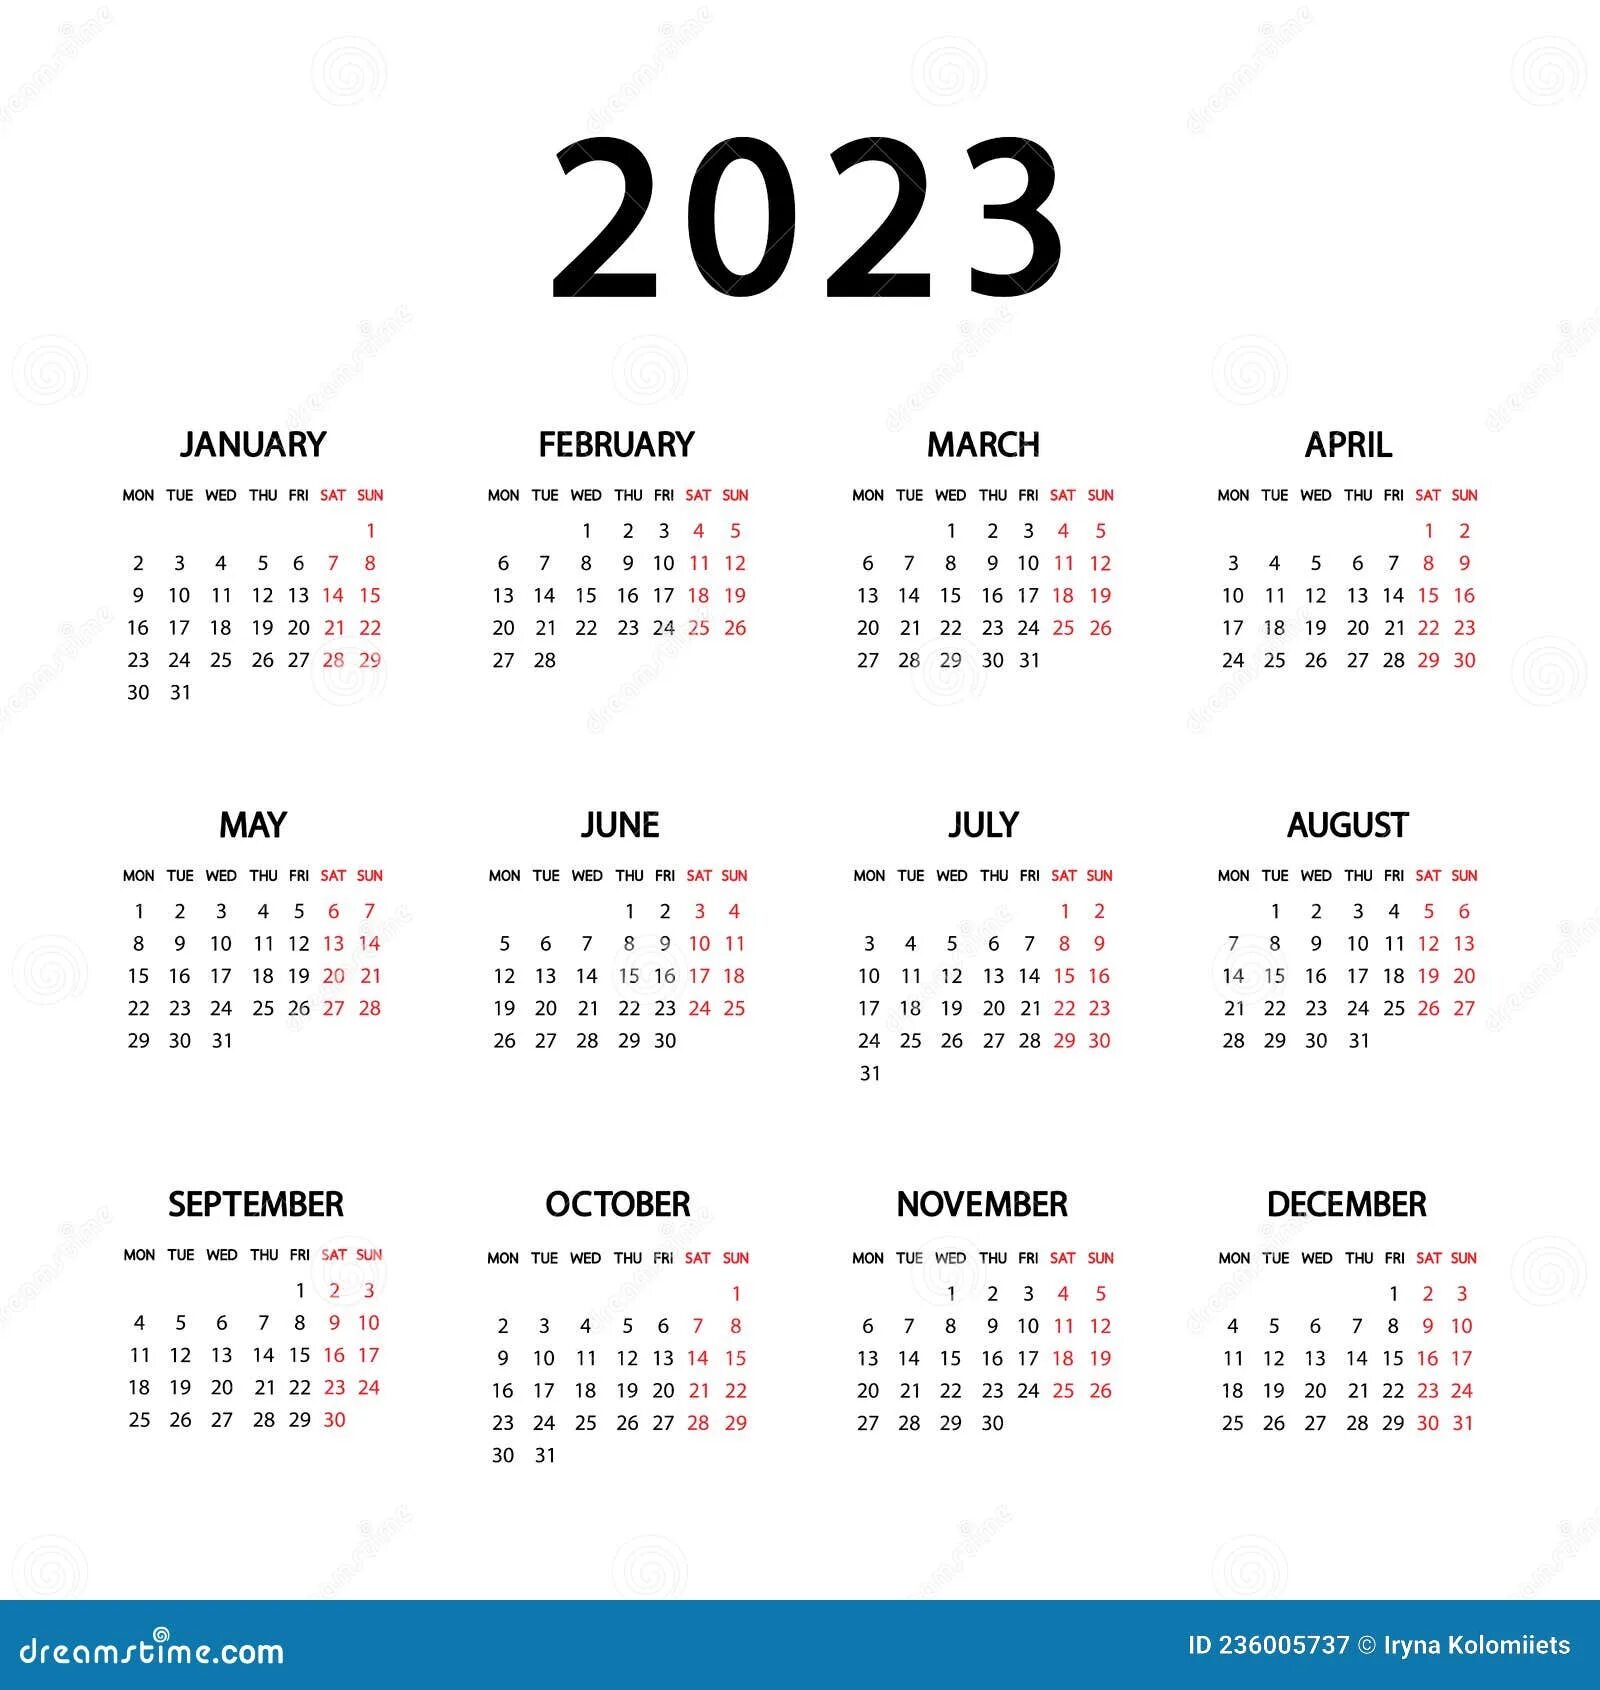 Каким будет январь 2023 года. Календарь 2023. Календарь на 2023 год русский. Календарик на 2023 год вертикальный. Календарная сетка на 2023 год.